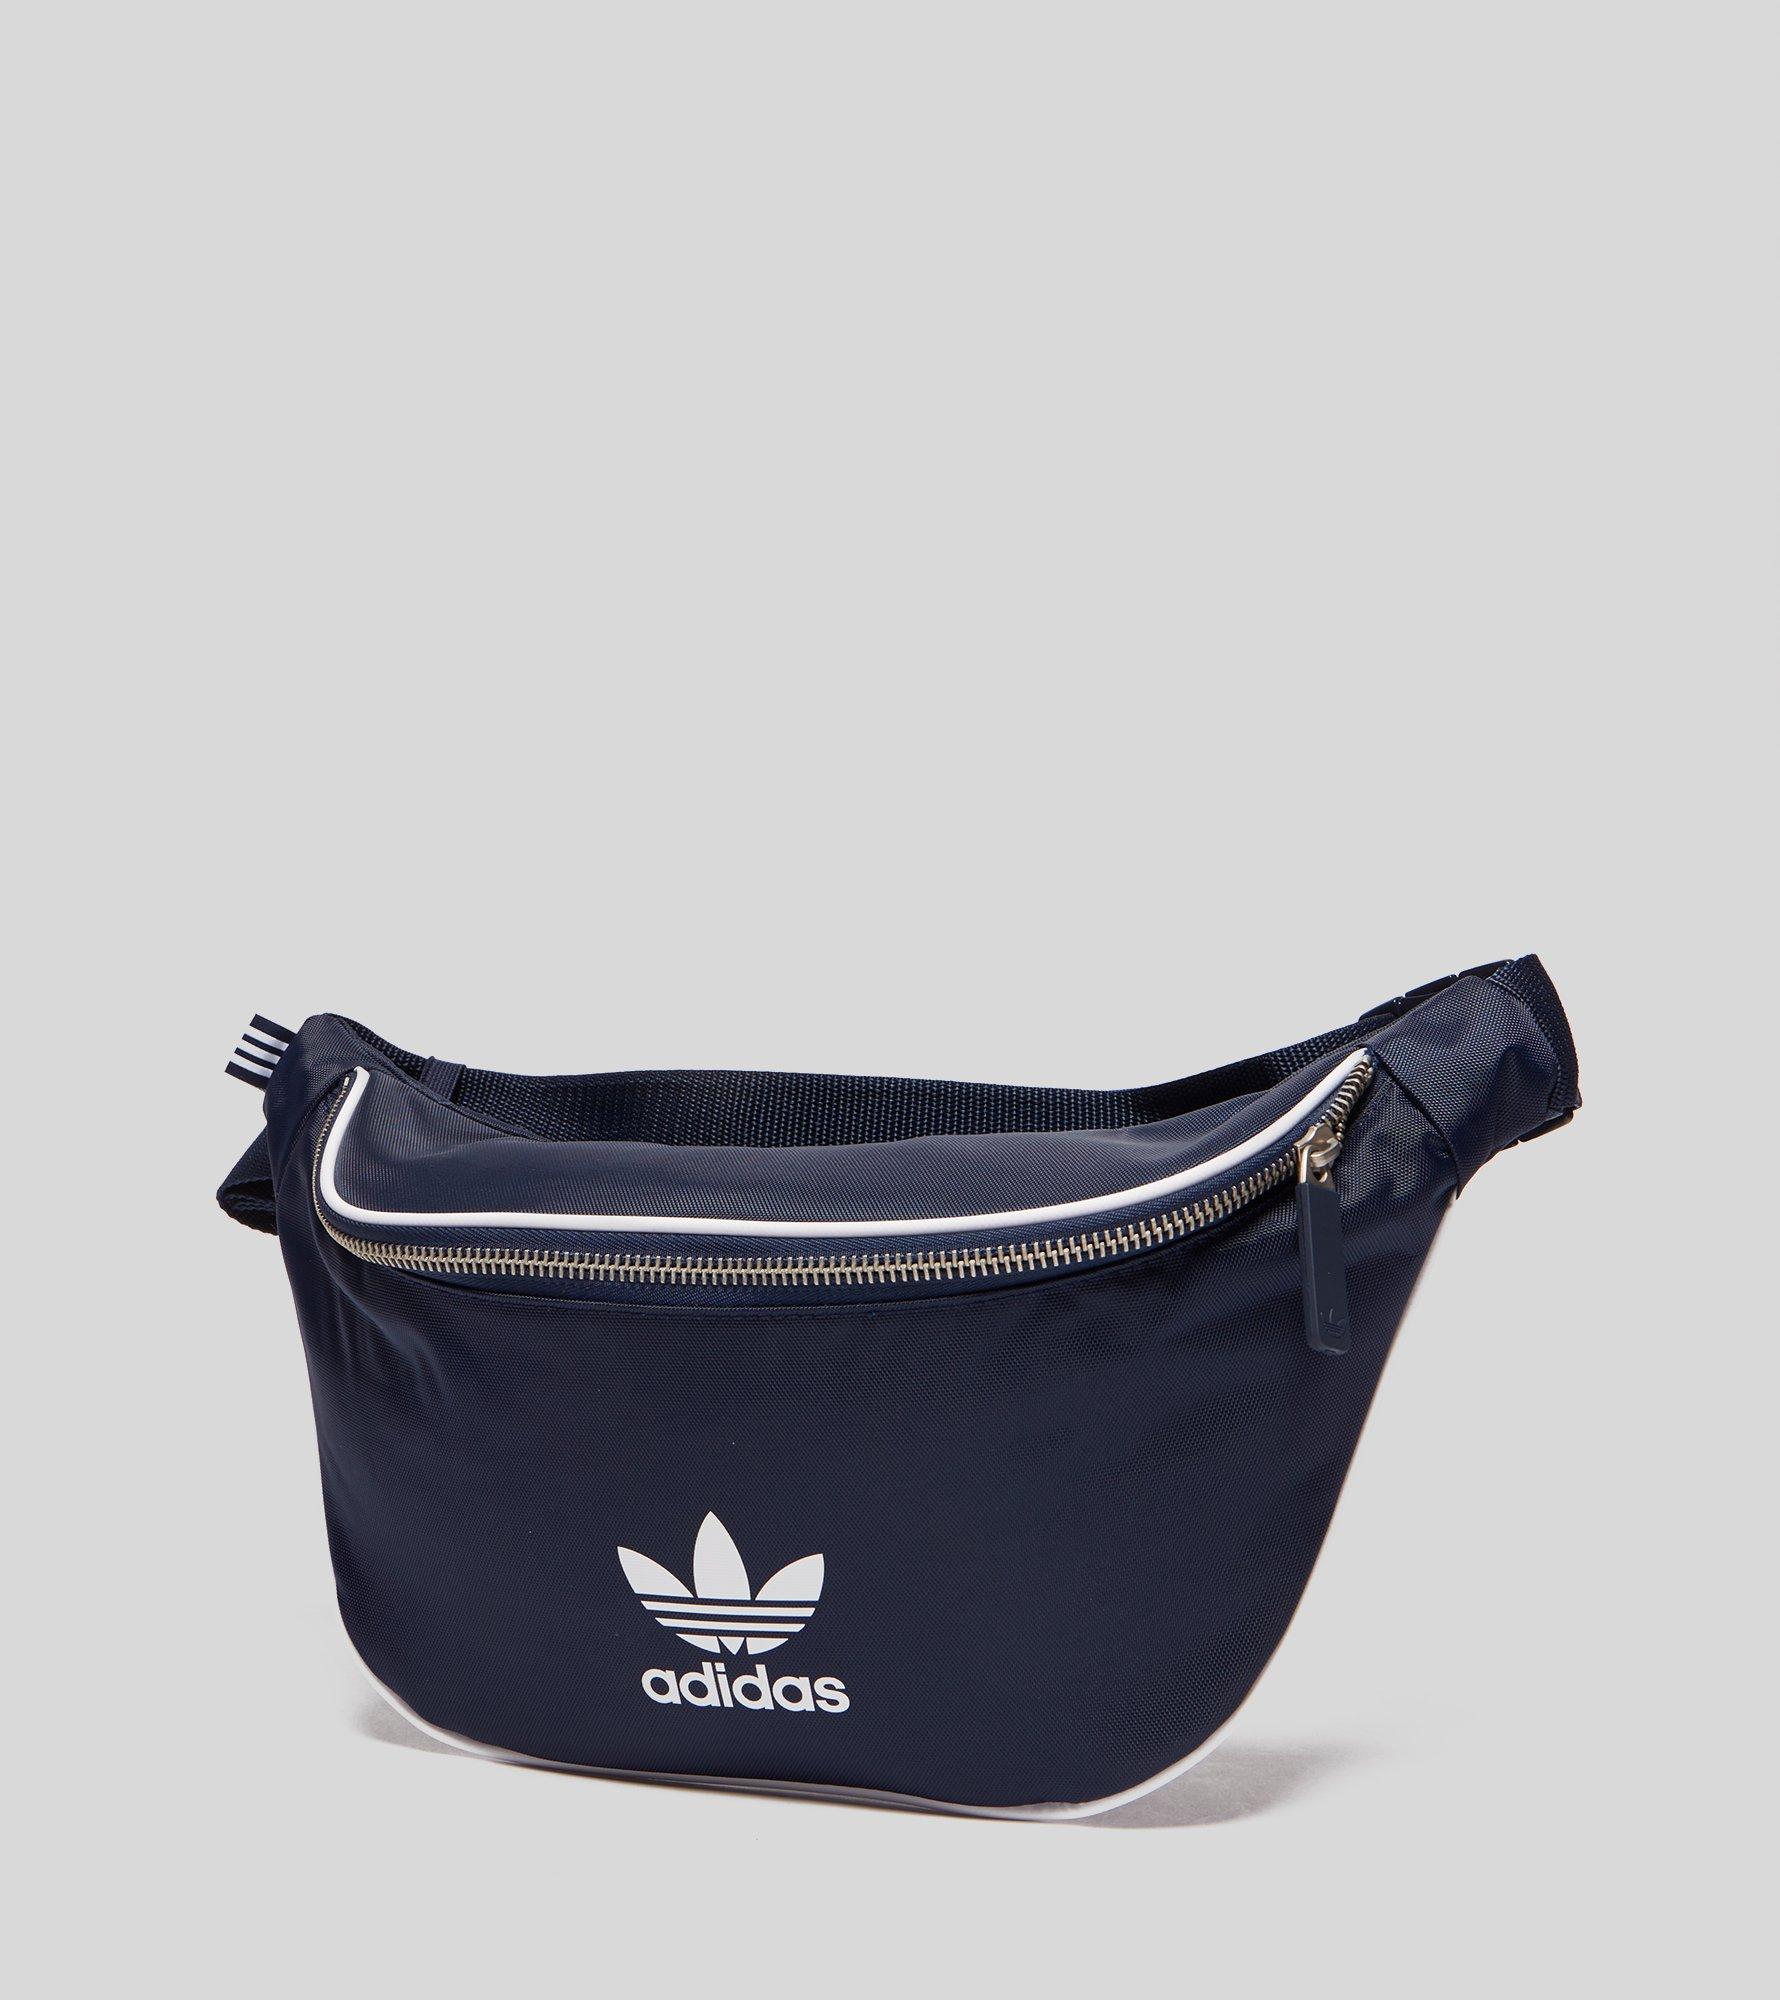 adidas Originals Waist Bag in Blue for Men - Lyst